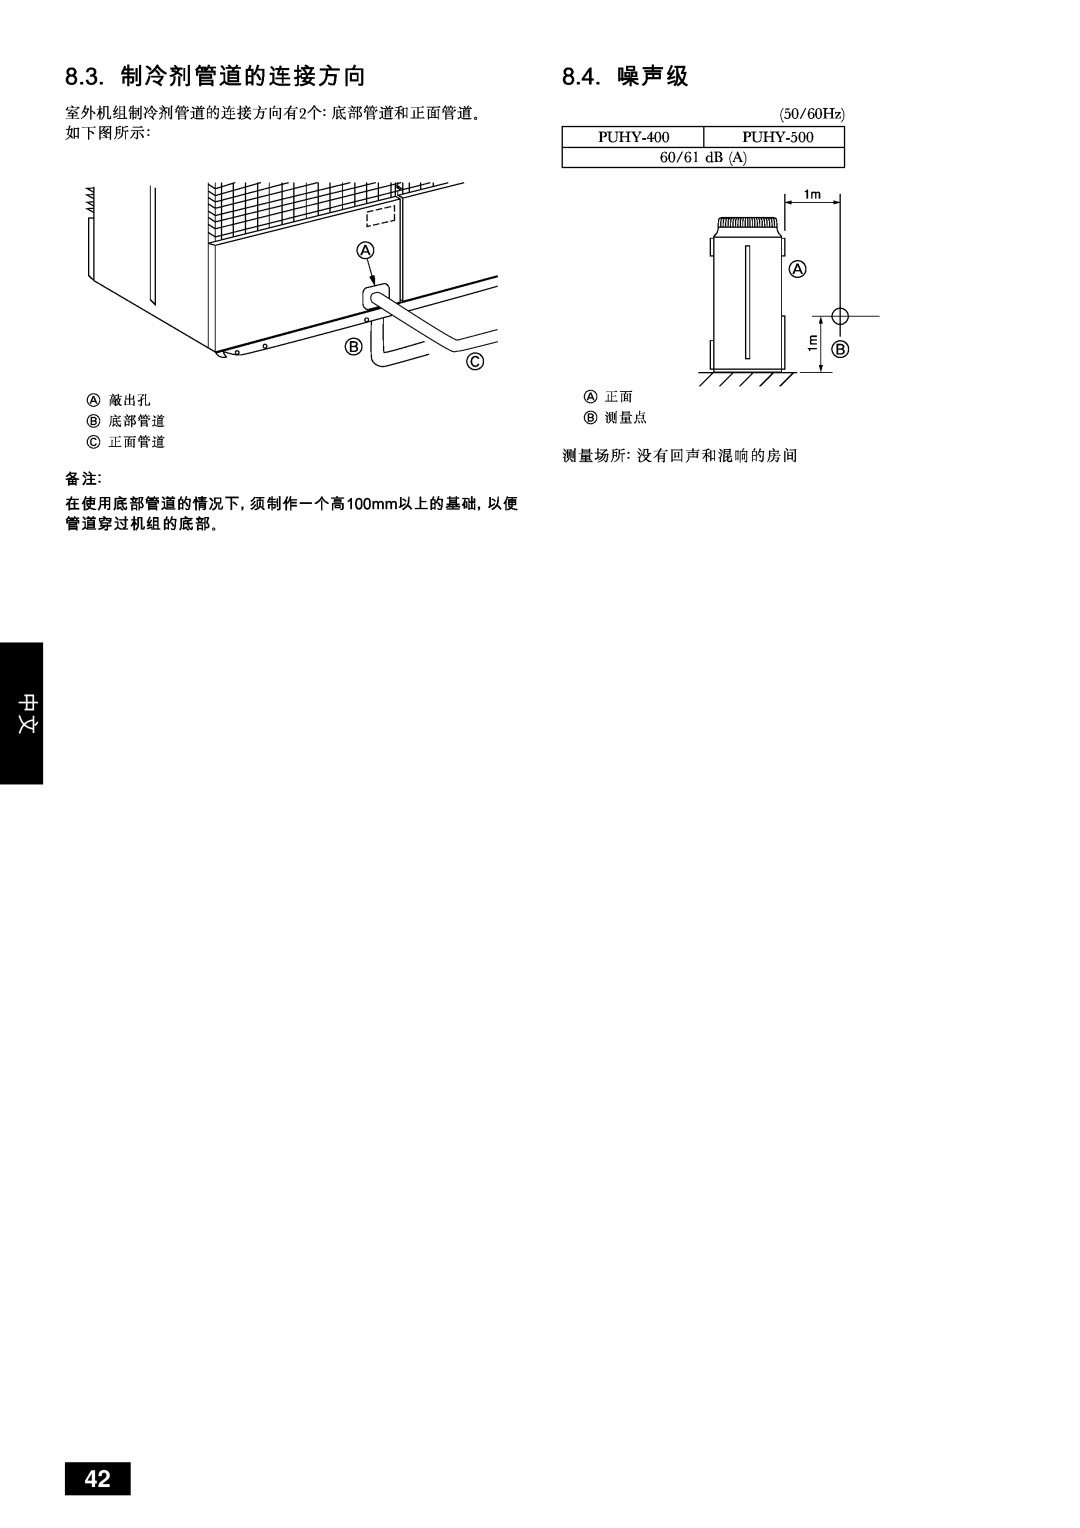 Mitsubishi Electronics PUHY-YMC installation manual Ukpk, Ukqk 